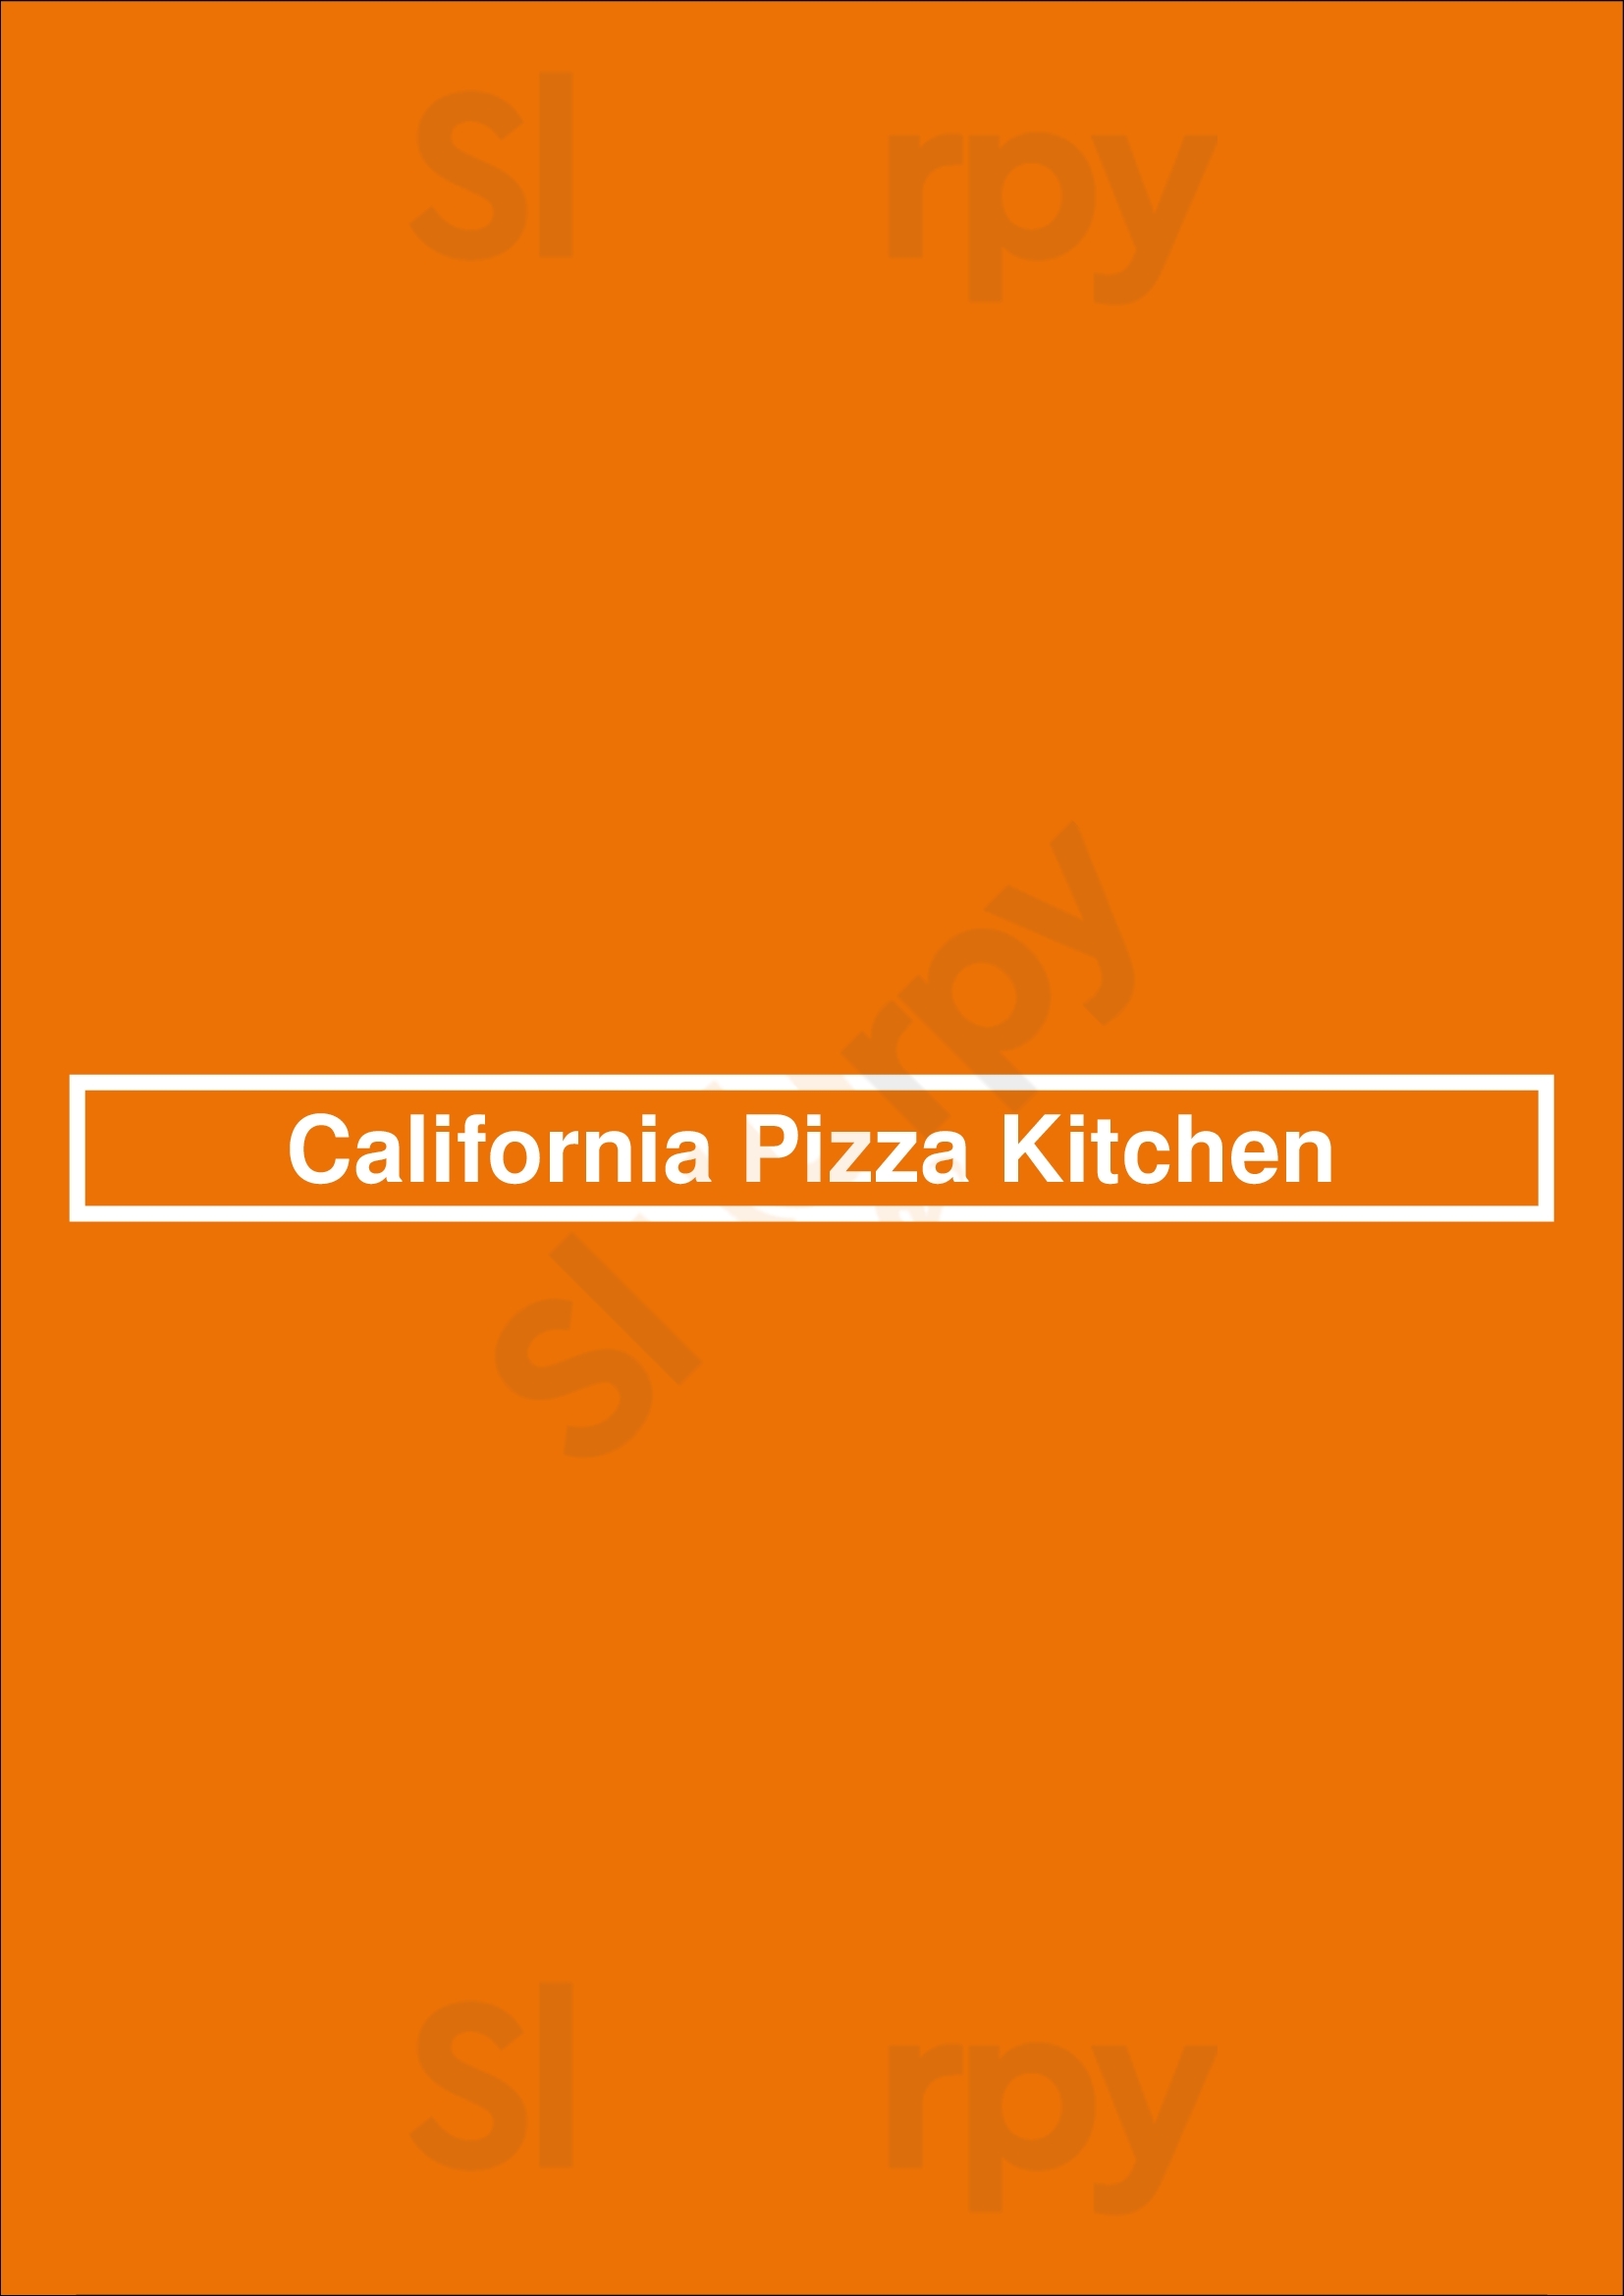 California Pizza Kitchen Newport Beach Menu - 1